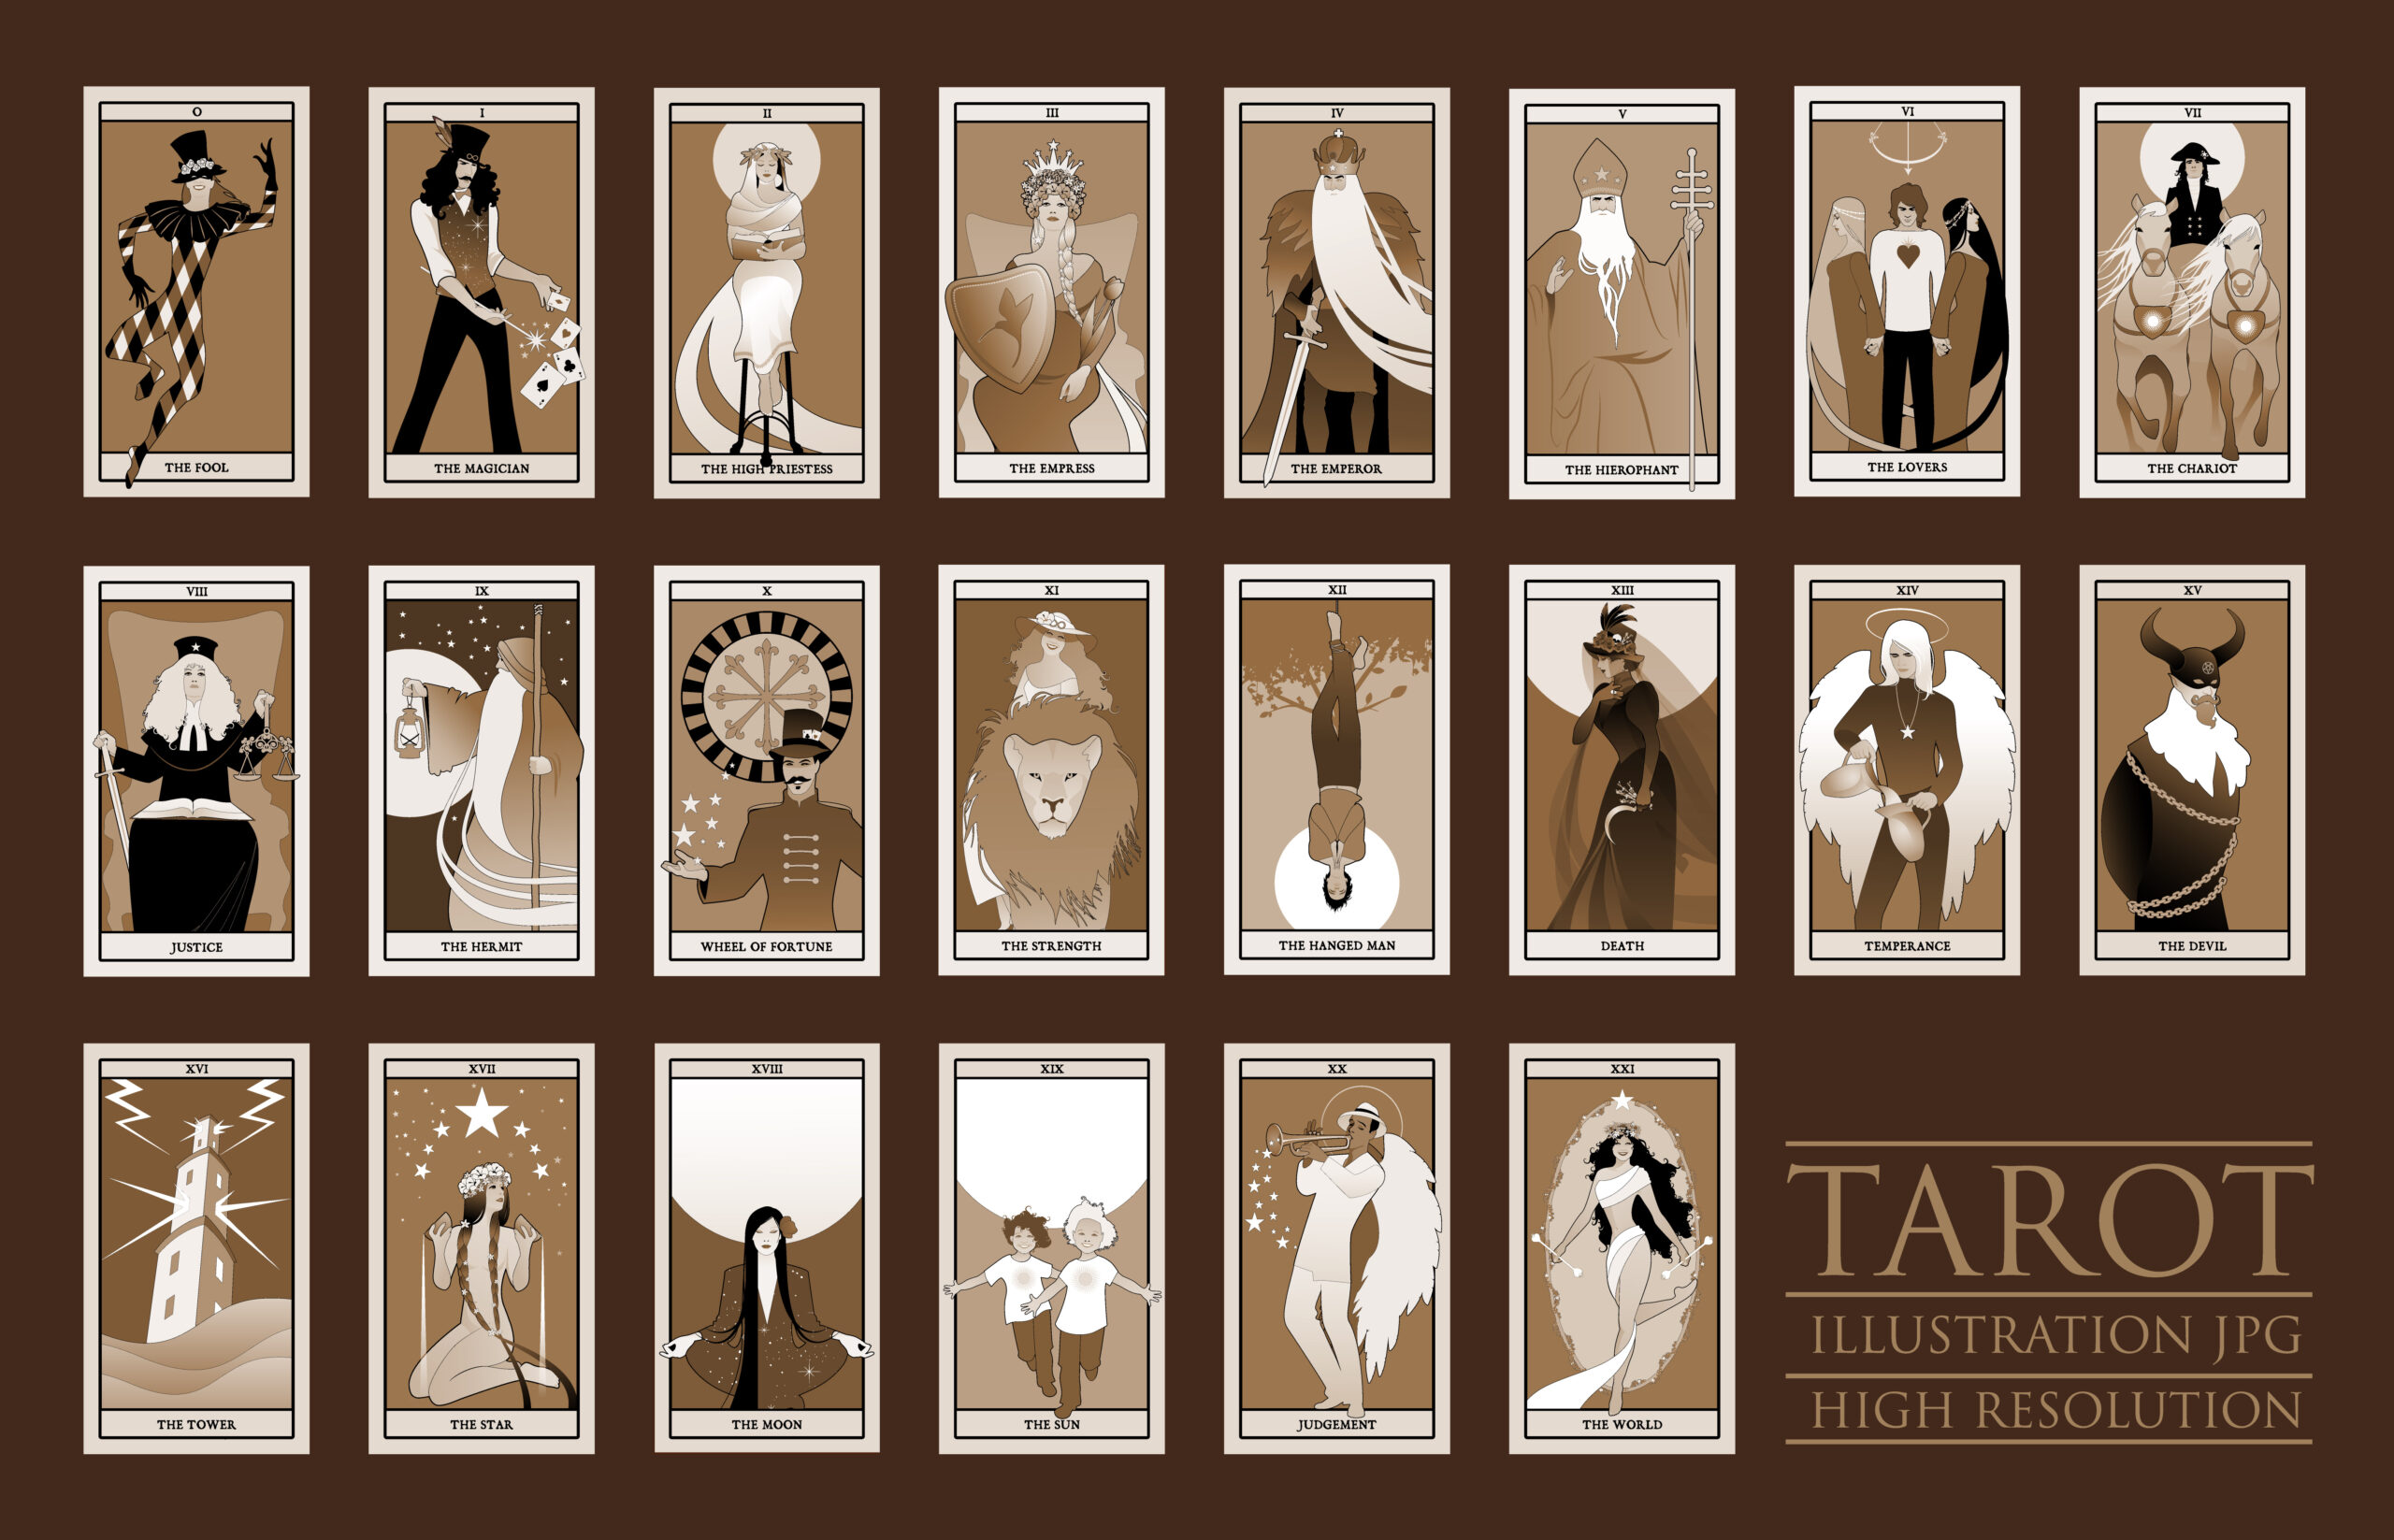 22 Major Arcana of the Tarot card in full. JPG illustrations in high resolution